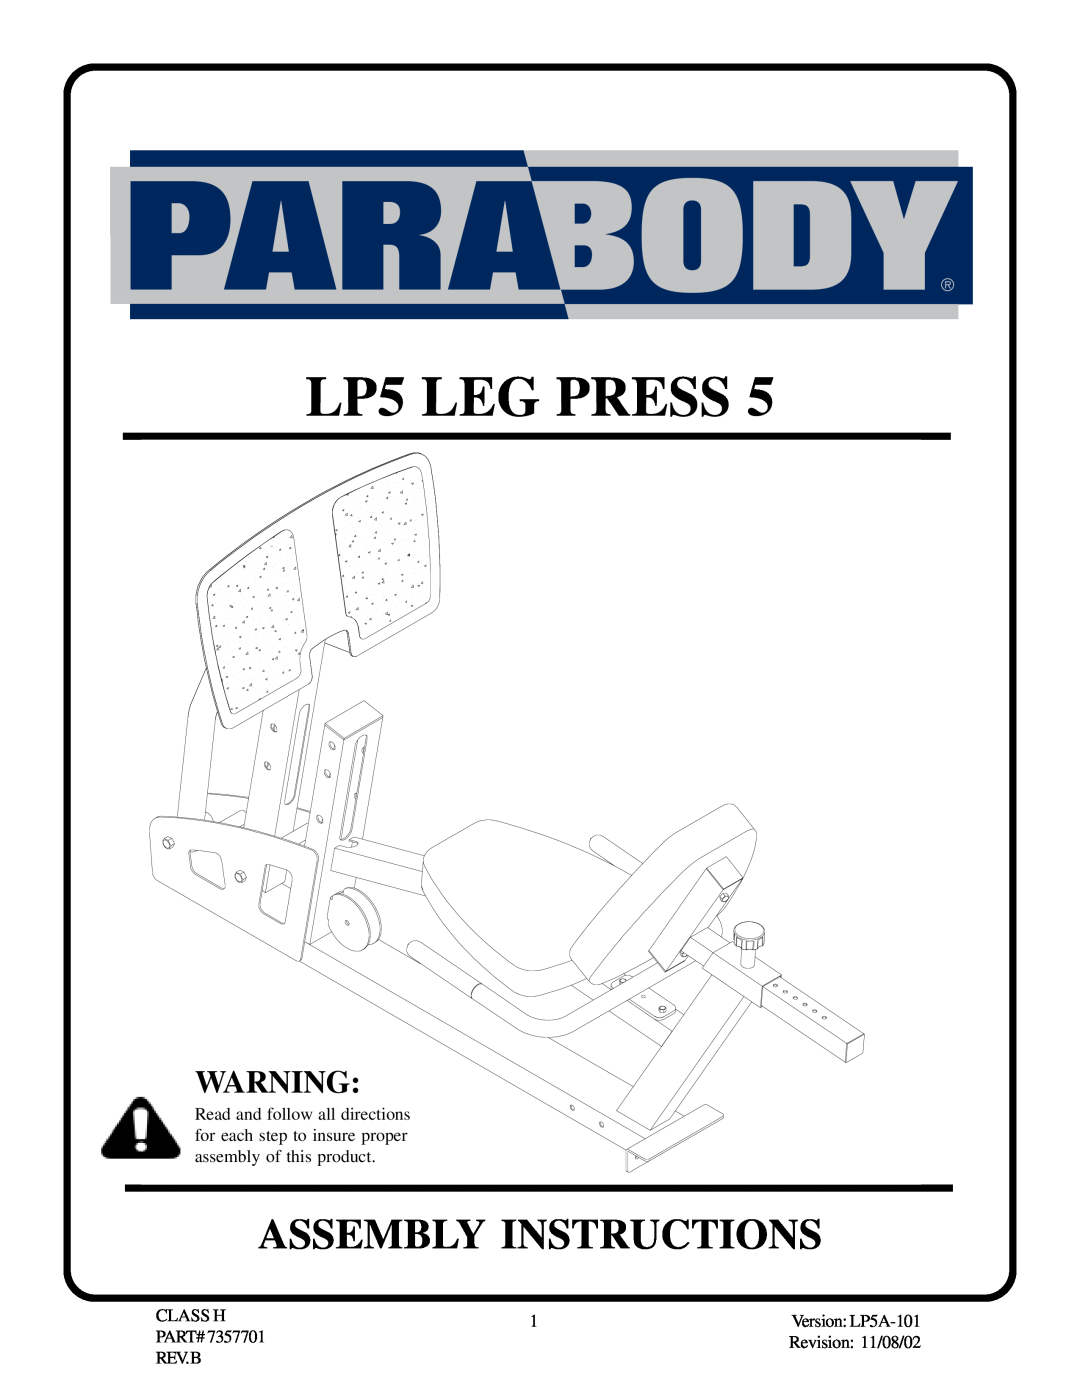 ParaBody Leg Press 5 manual Assembly Instructions, LP5 LEG PRESS 